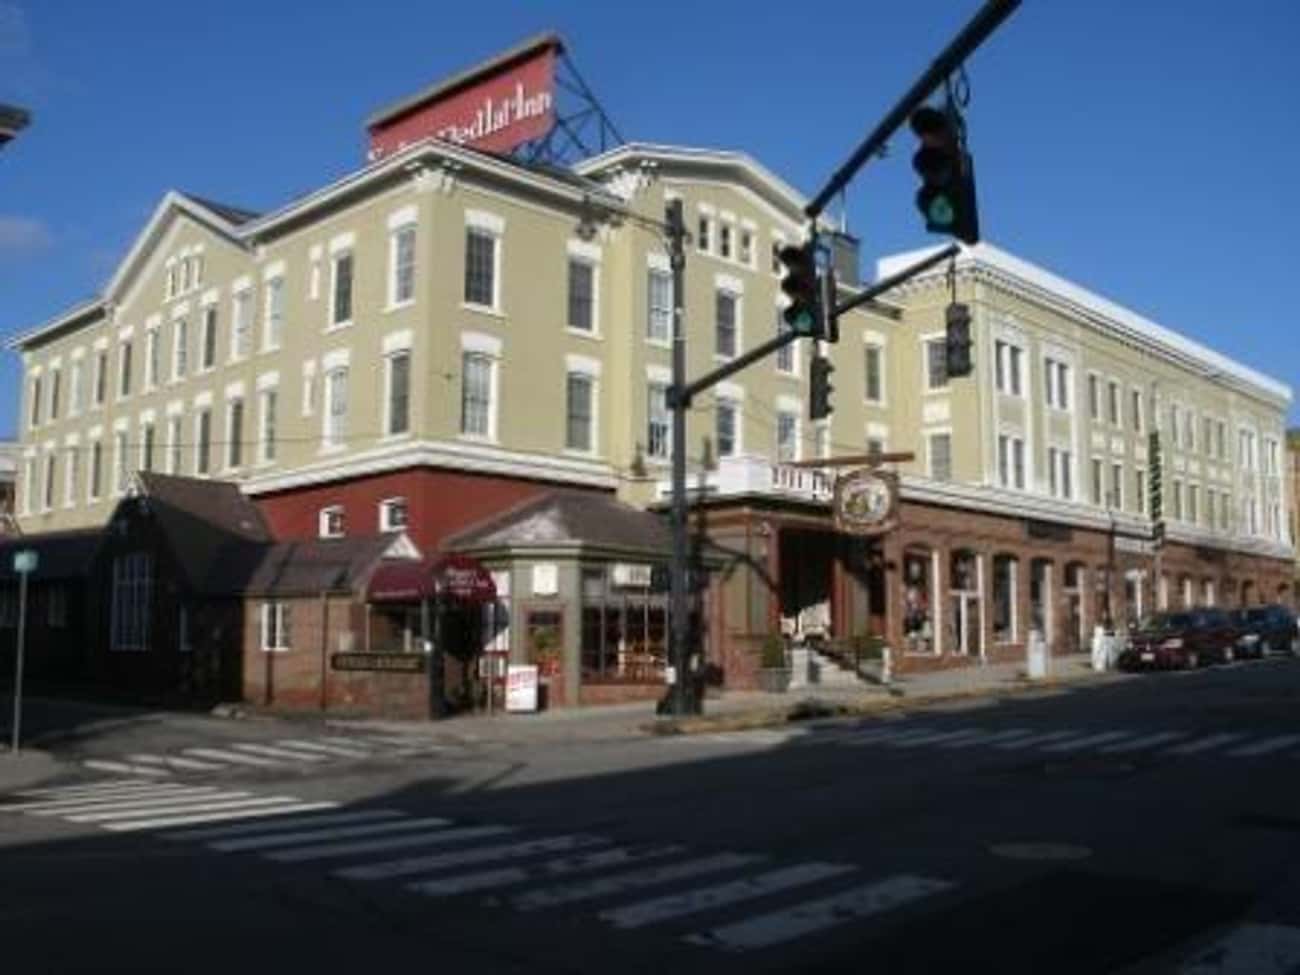 Connecticut: The Yankee Pedlar Inn